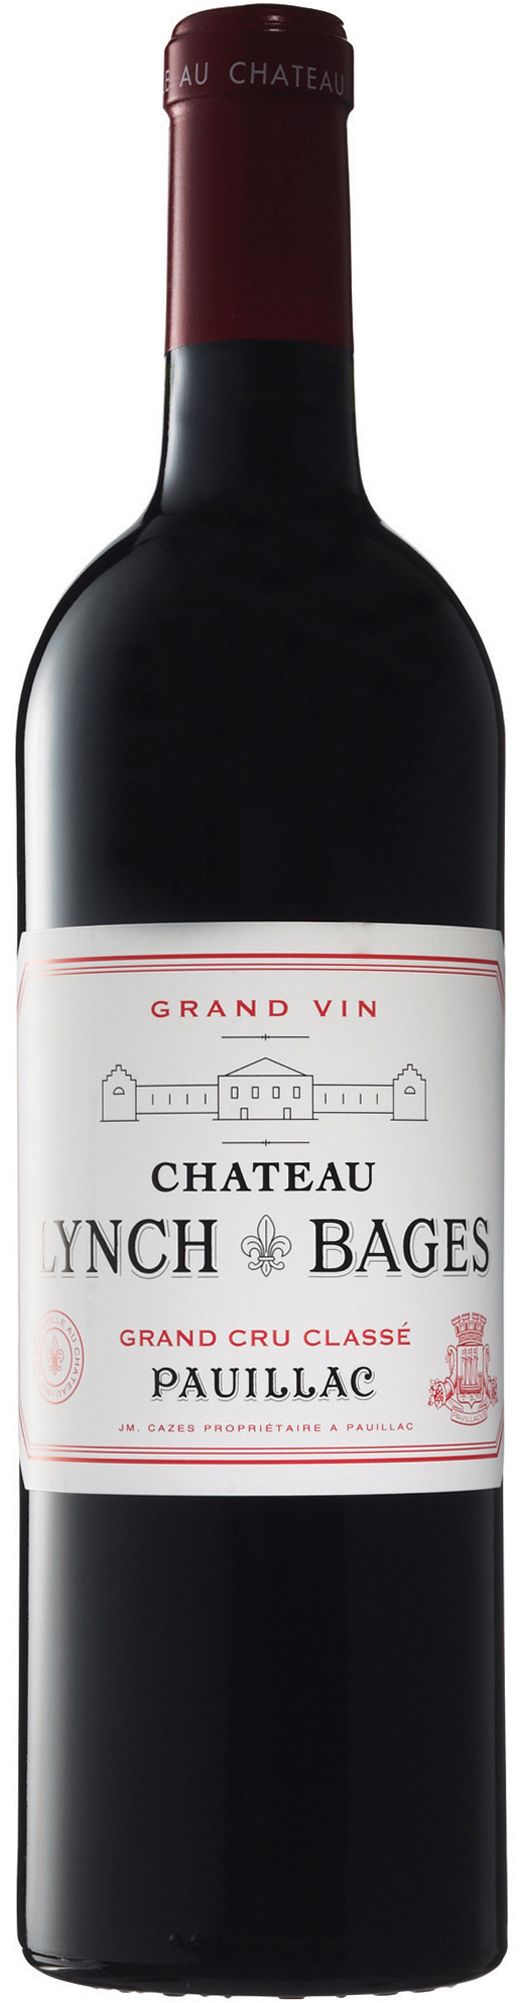 Chateau Lynch-Bages, Grand Cru Classe, 2005